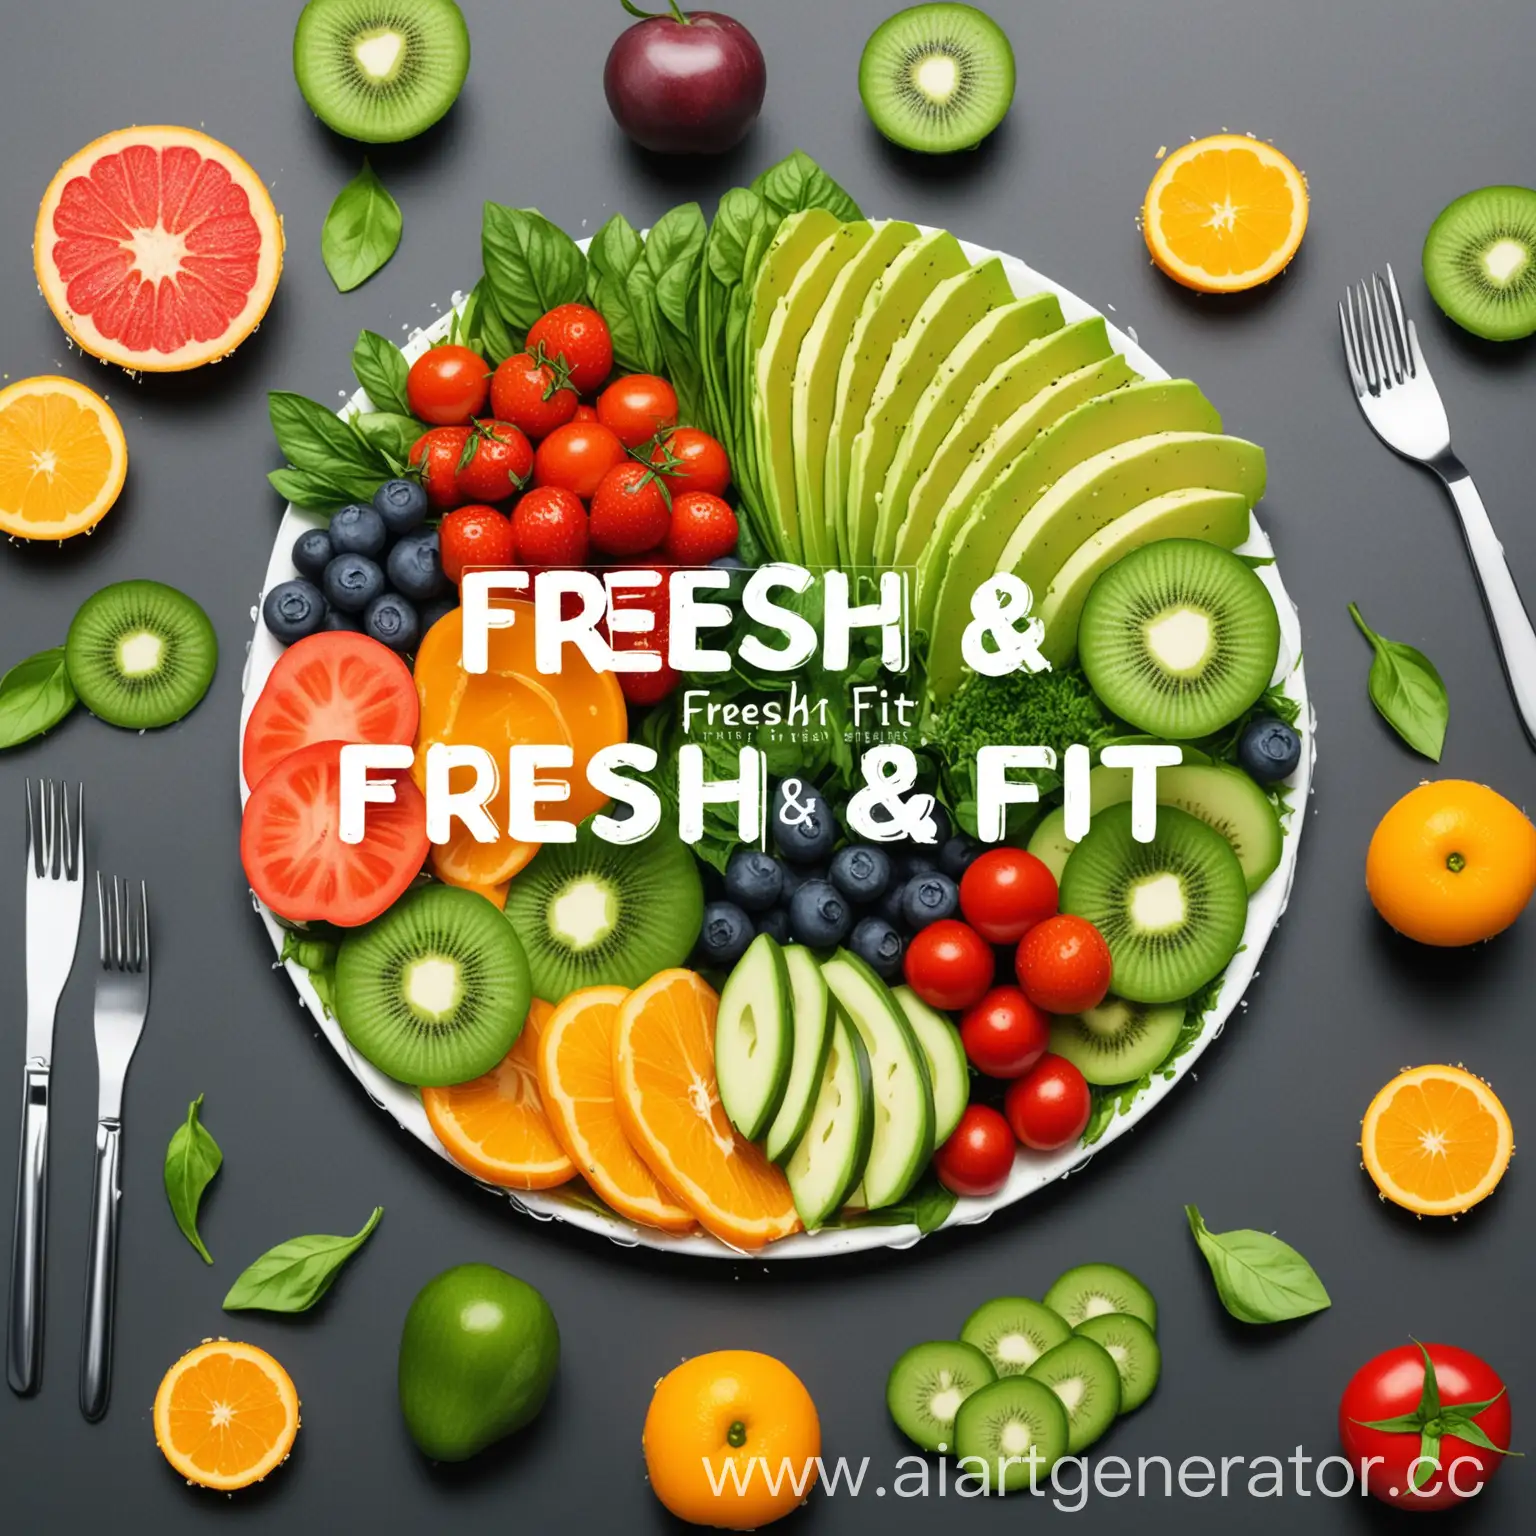 Арт про здоровую пищу на бизнес план с названием Fresh & Fit
